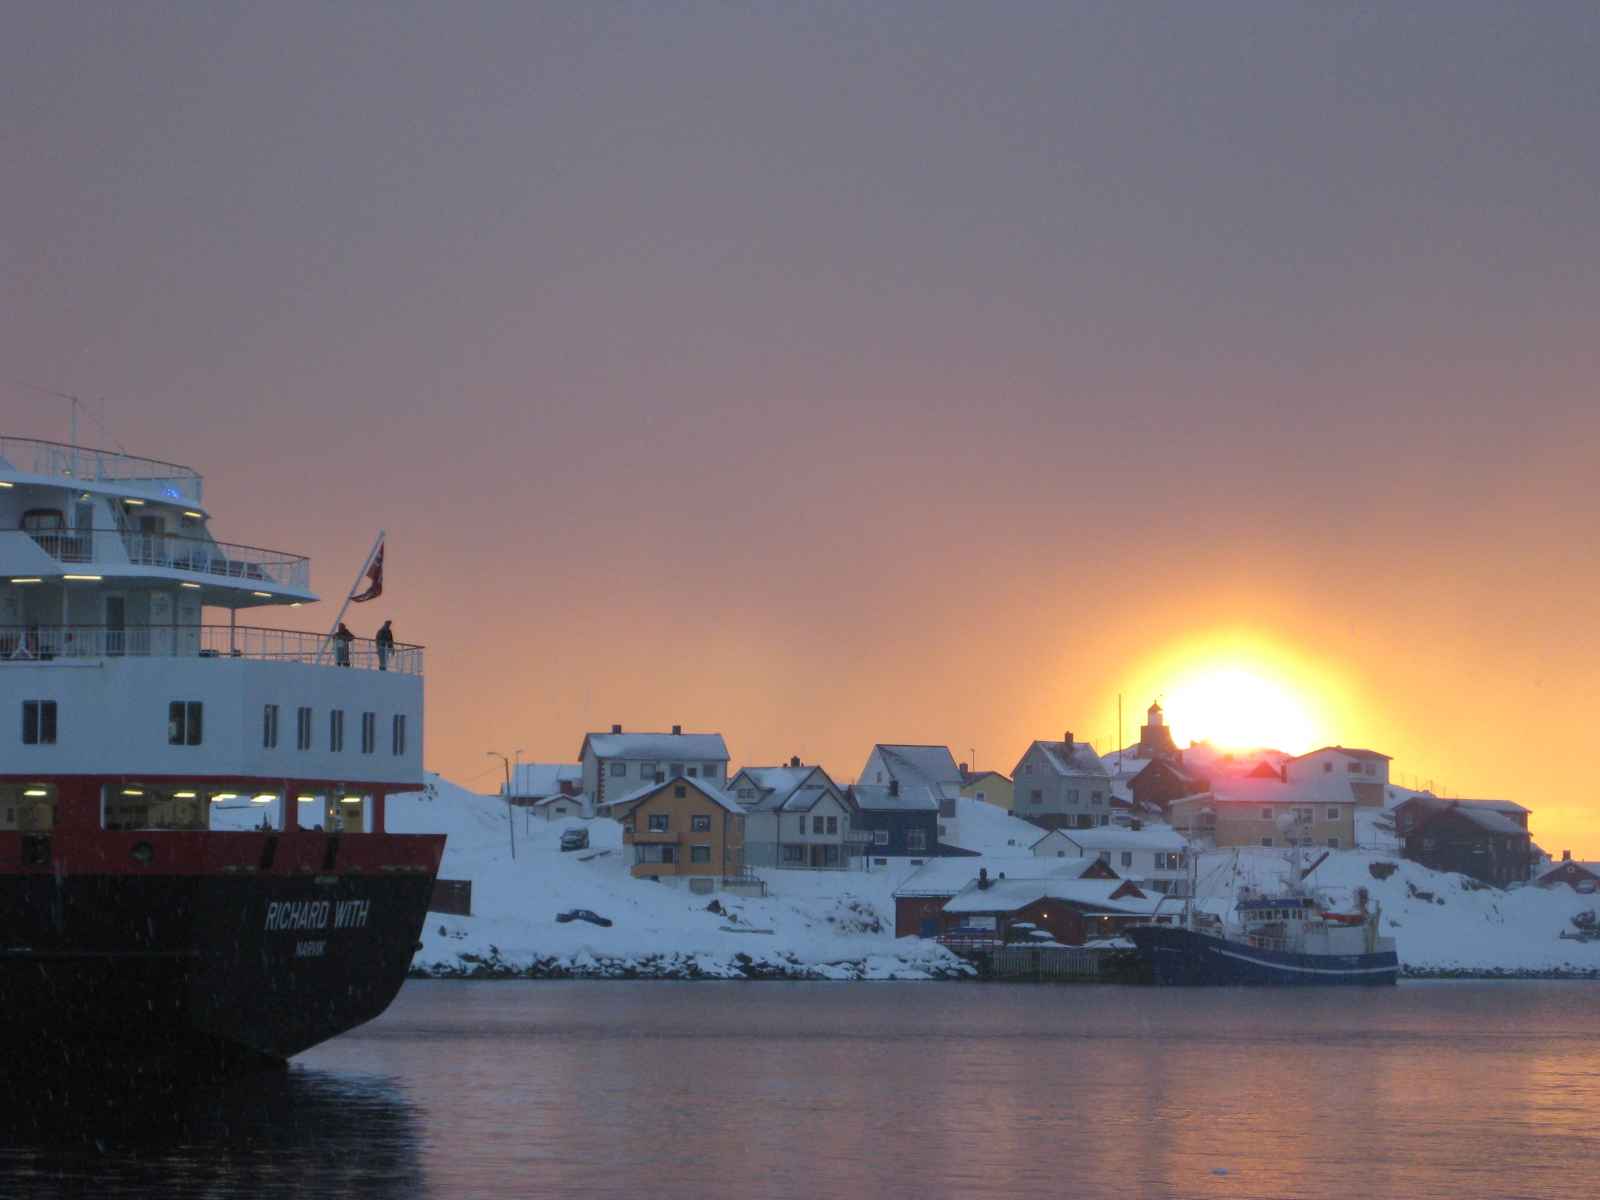 Honningsvag et le bateau MS Richard With, Norvège